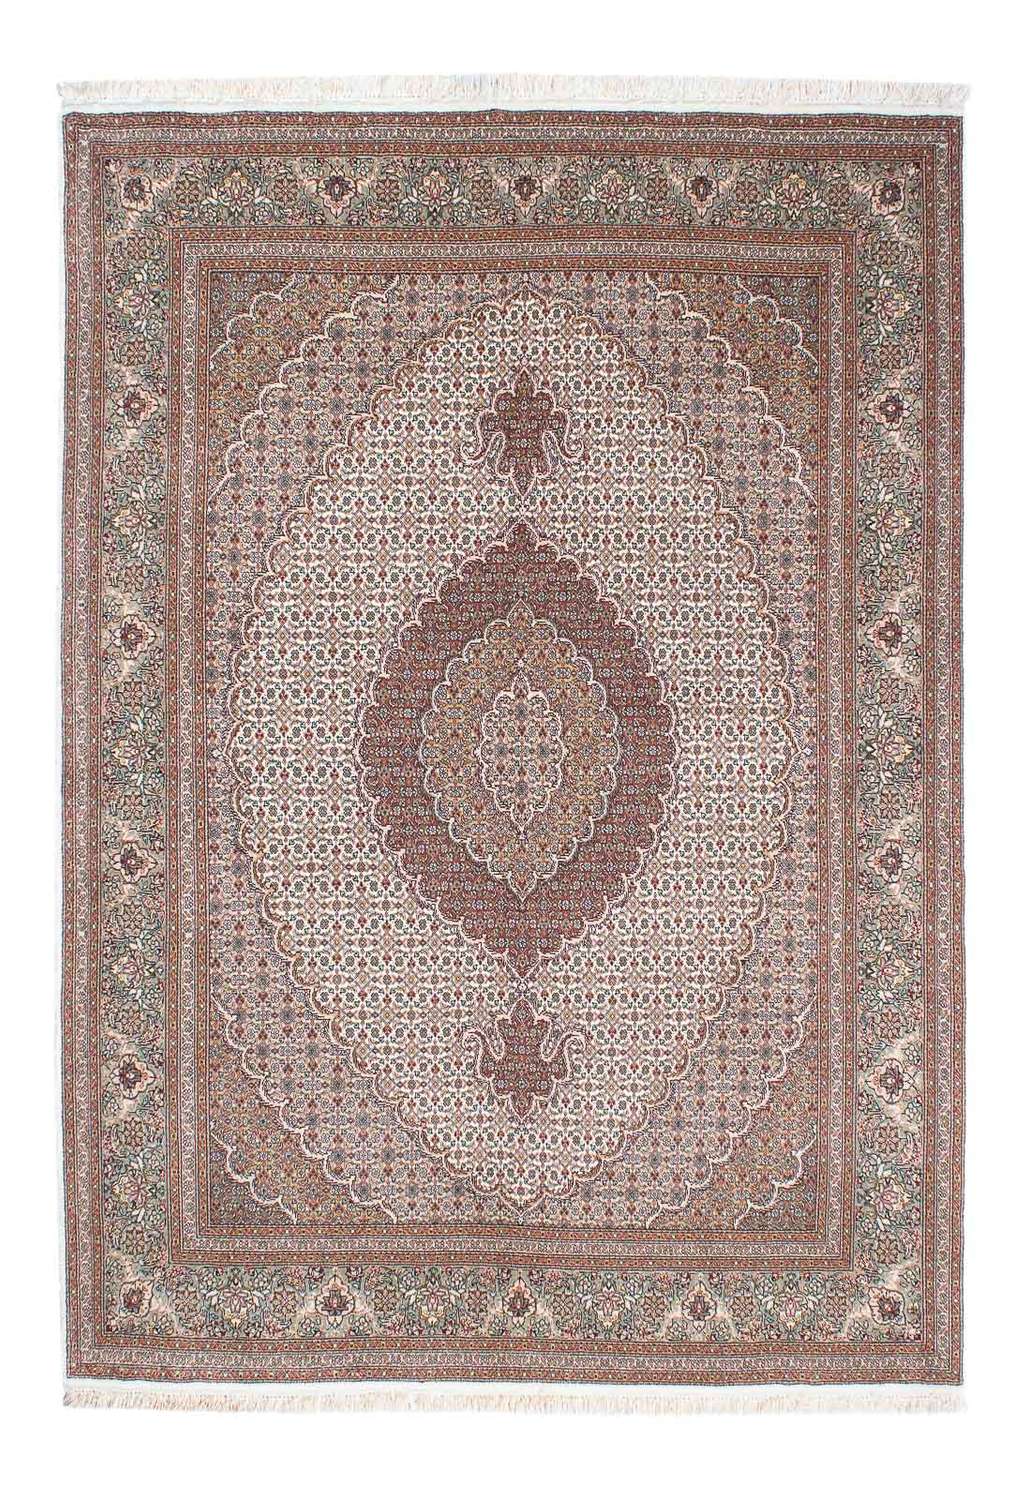 Perský koberec - Tabríz - 210 x 152 cm - béžová